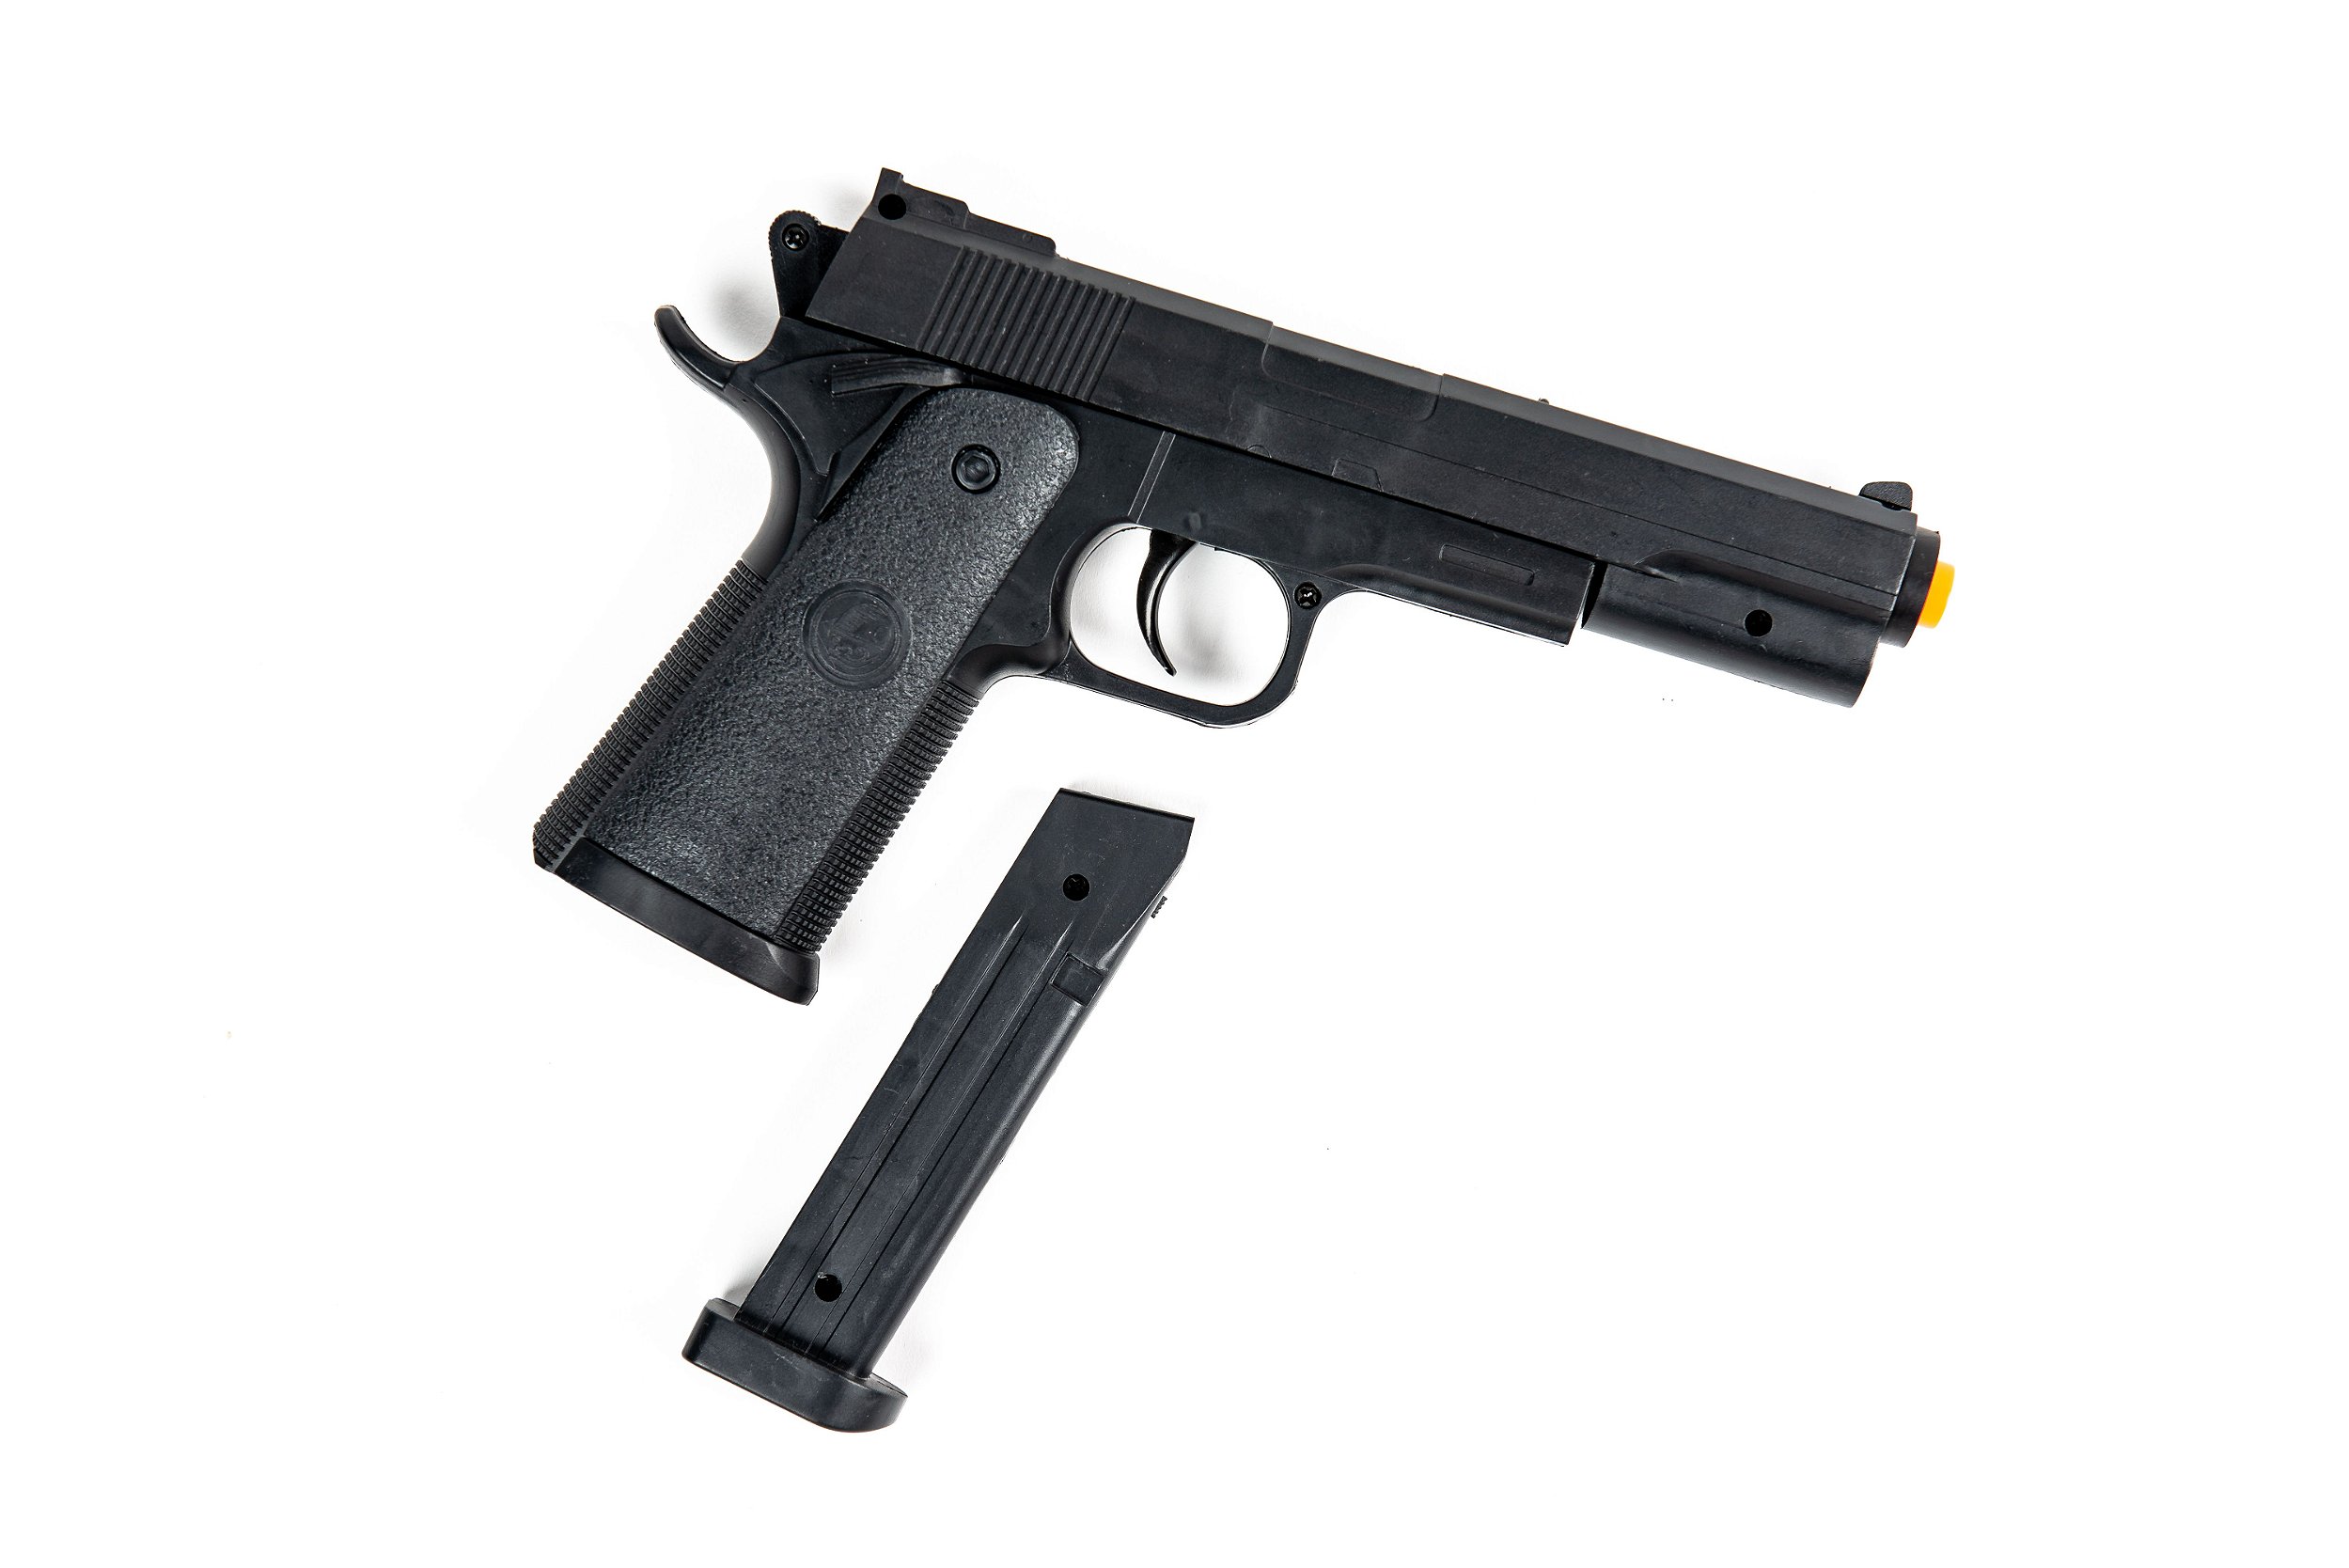 Pistola de Airsoft Toy da JG Works - Colt 1911 - Beretta 92